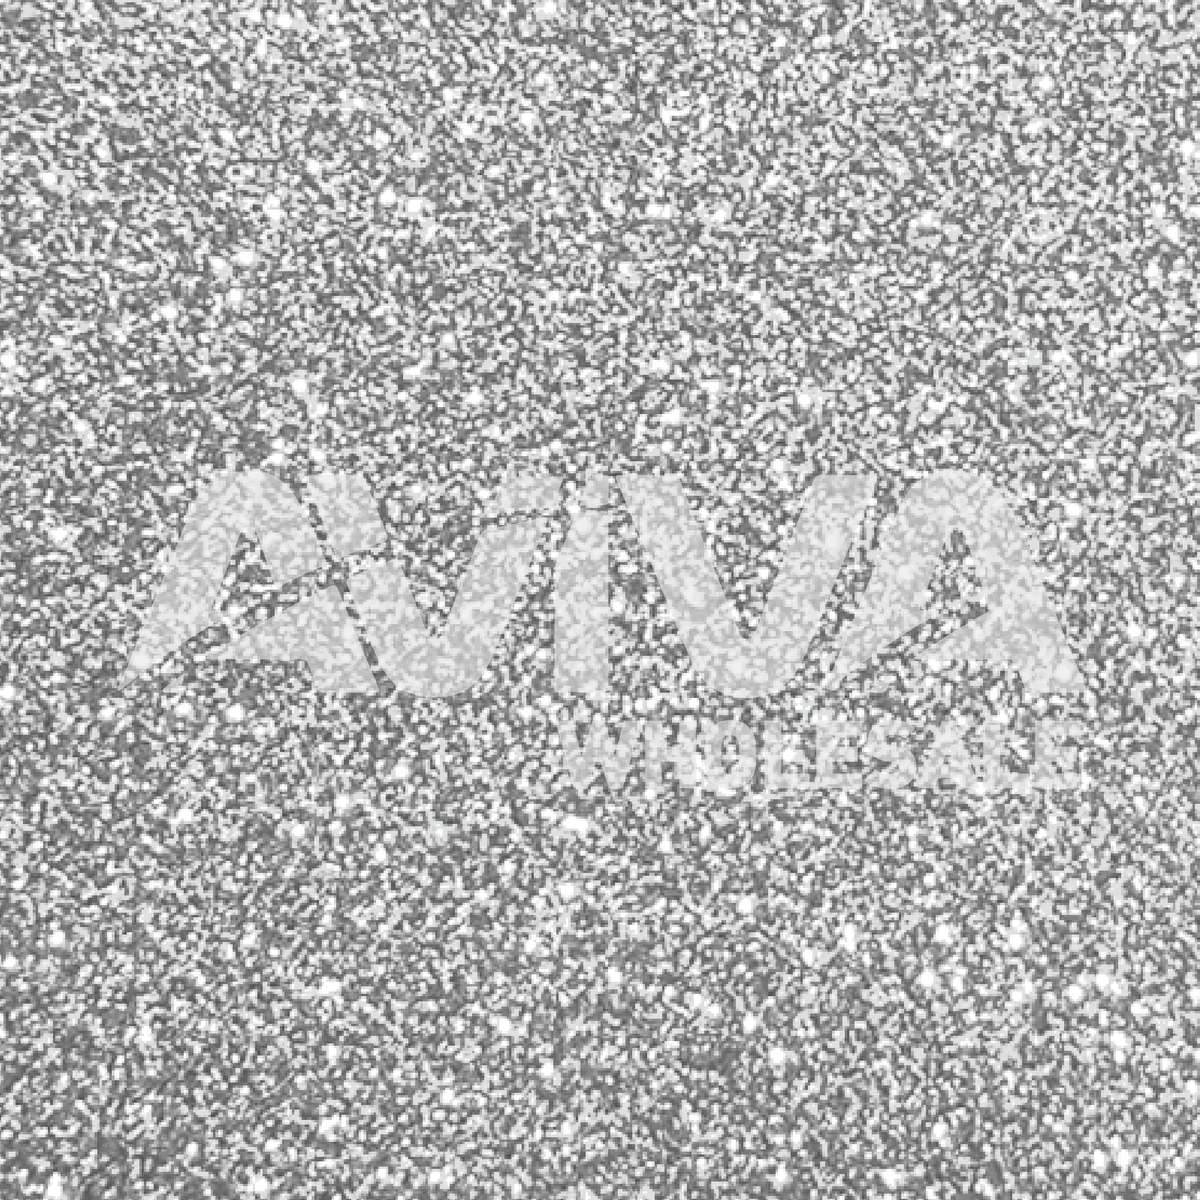 Ultra Flex Reflective Silver 20” wide Heat TRANSFER Vinyl for T-Shirt –  Aviva Wholesale